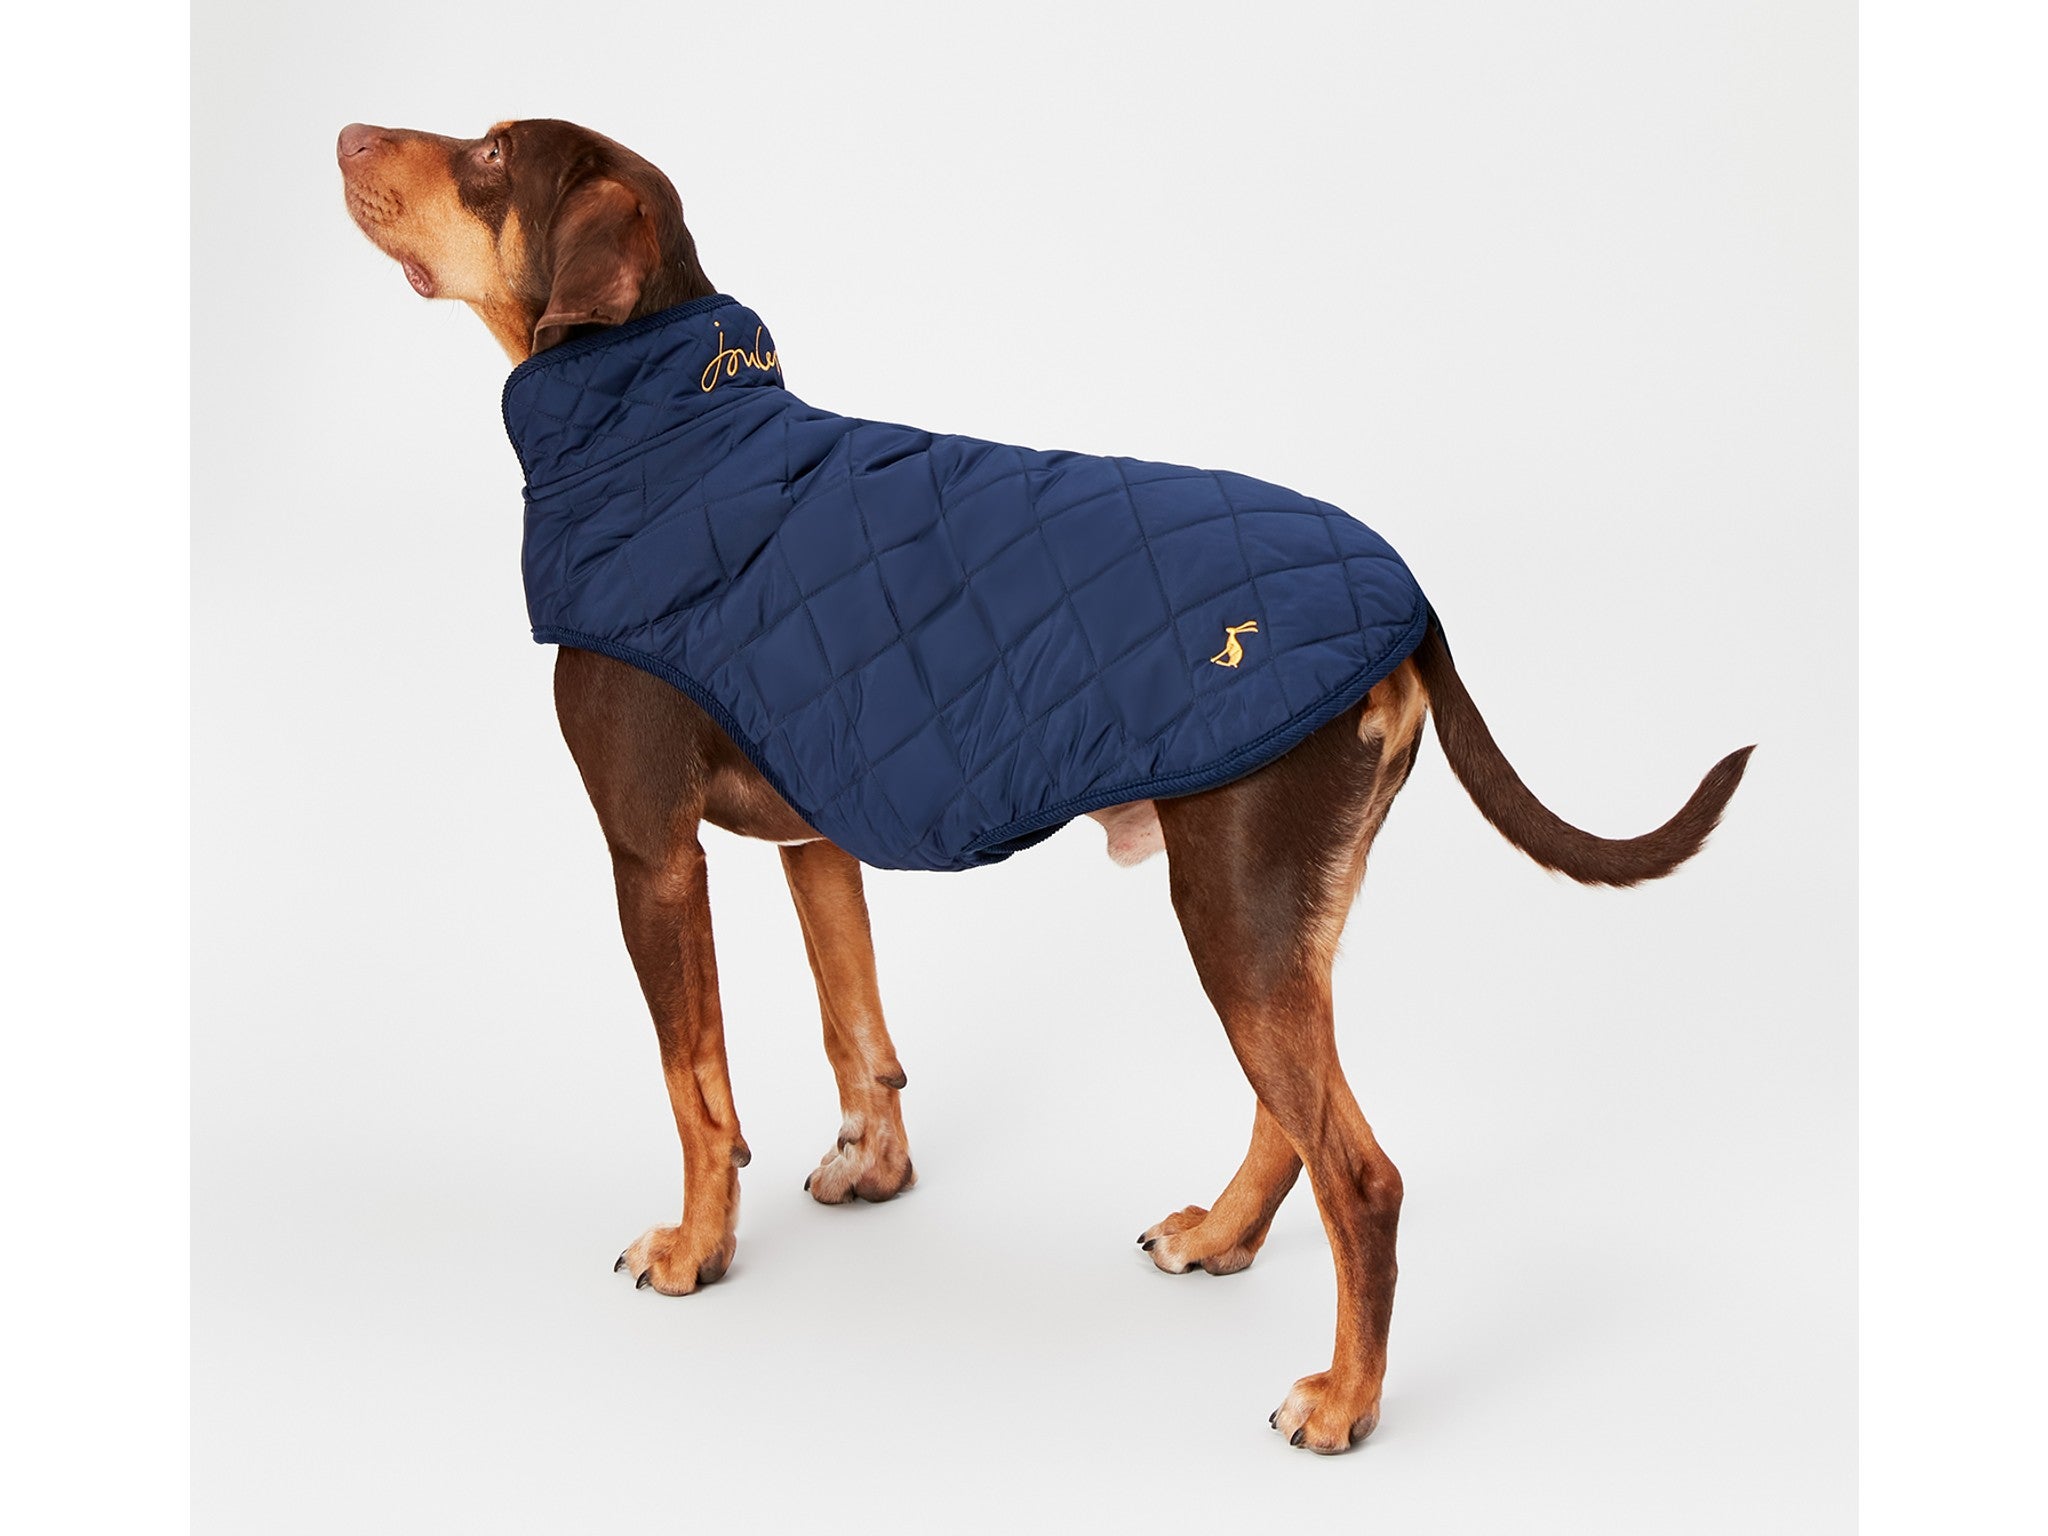 New Windhorse Tan Dog Coat Warm Fleece Waterproof Winter Jacket Clothes Puppy 